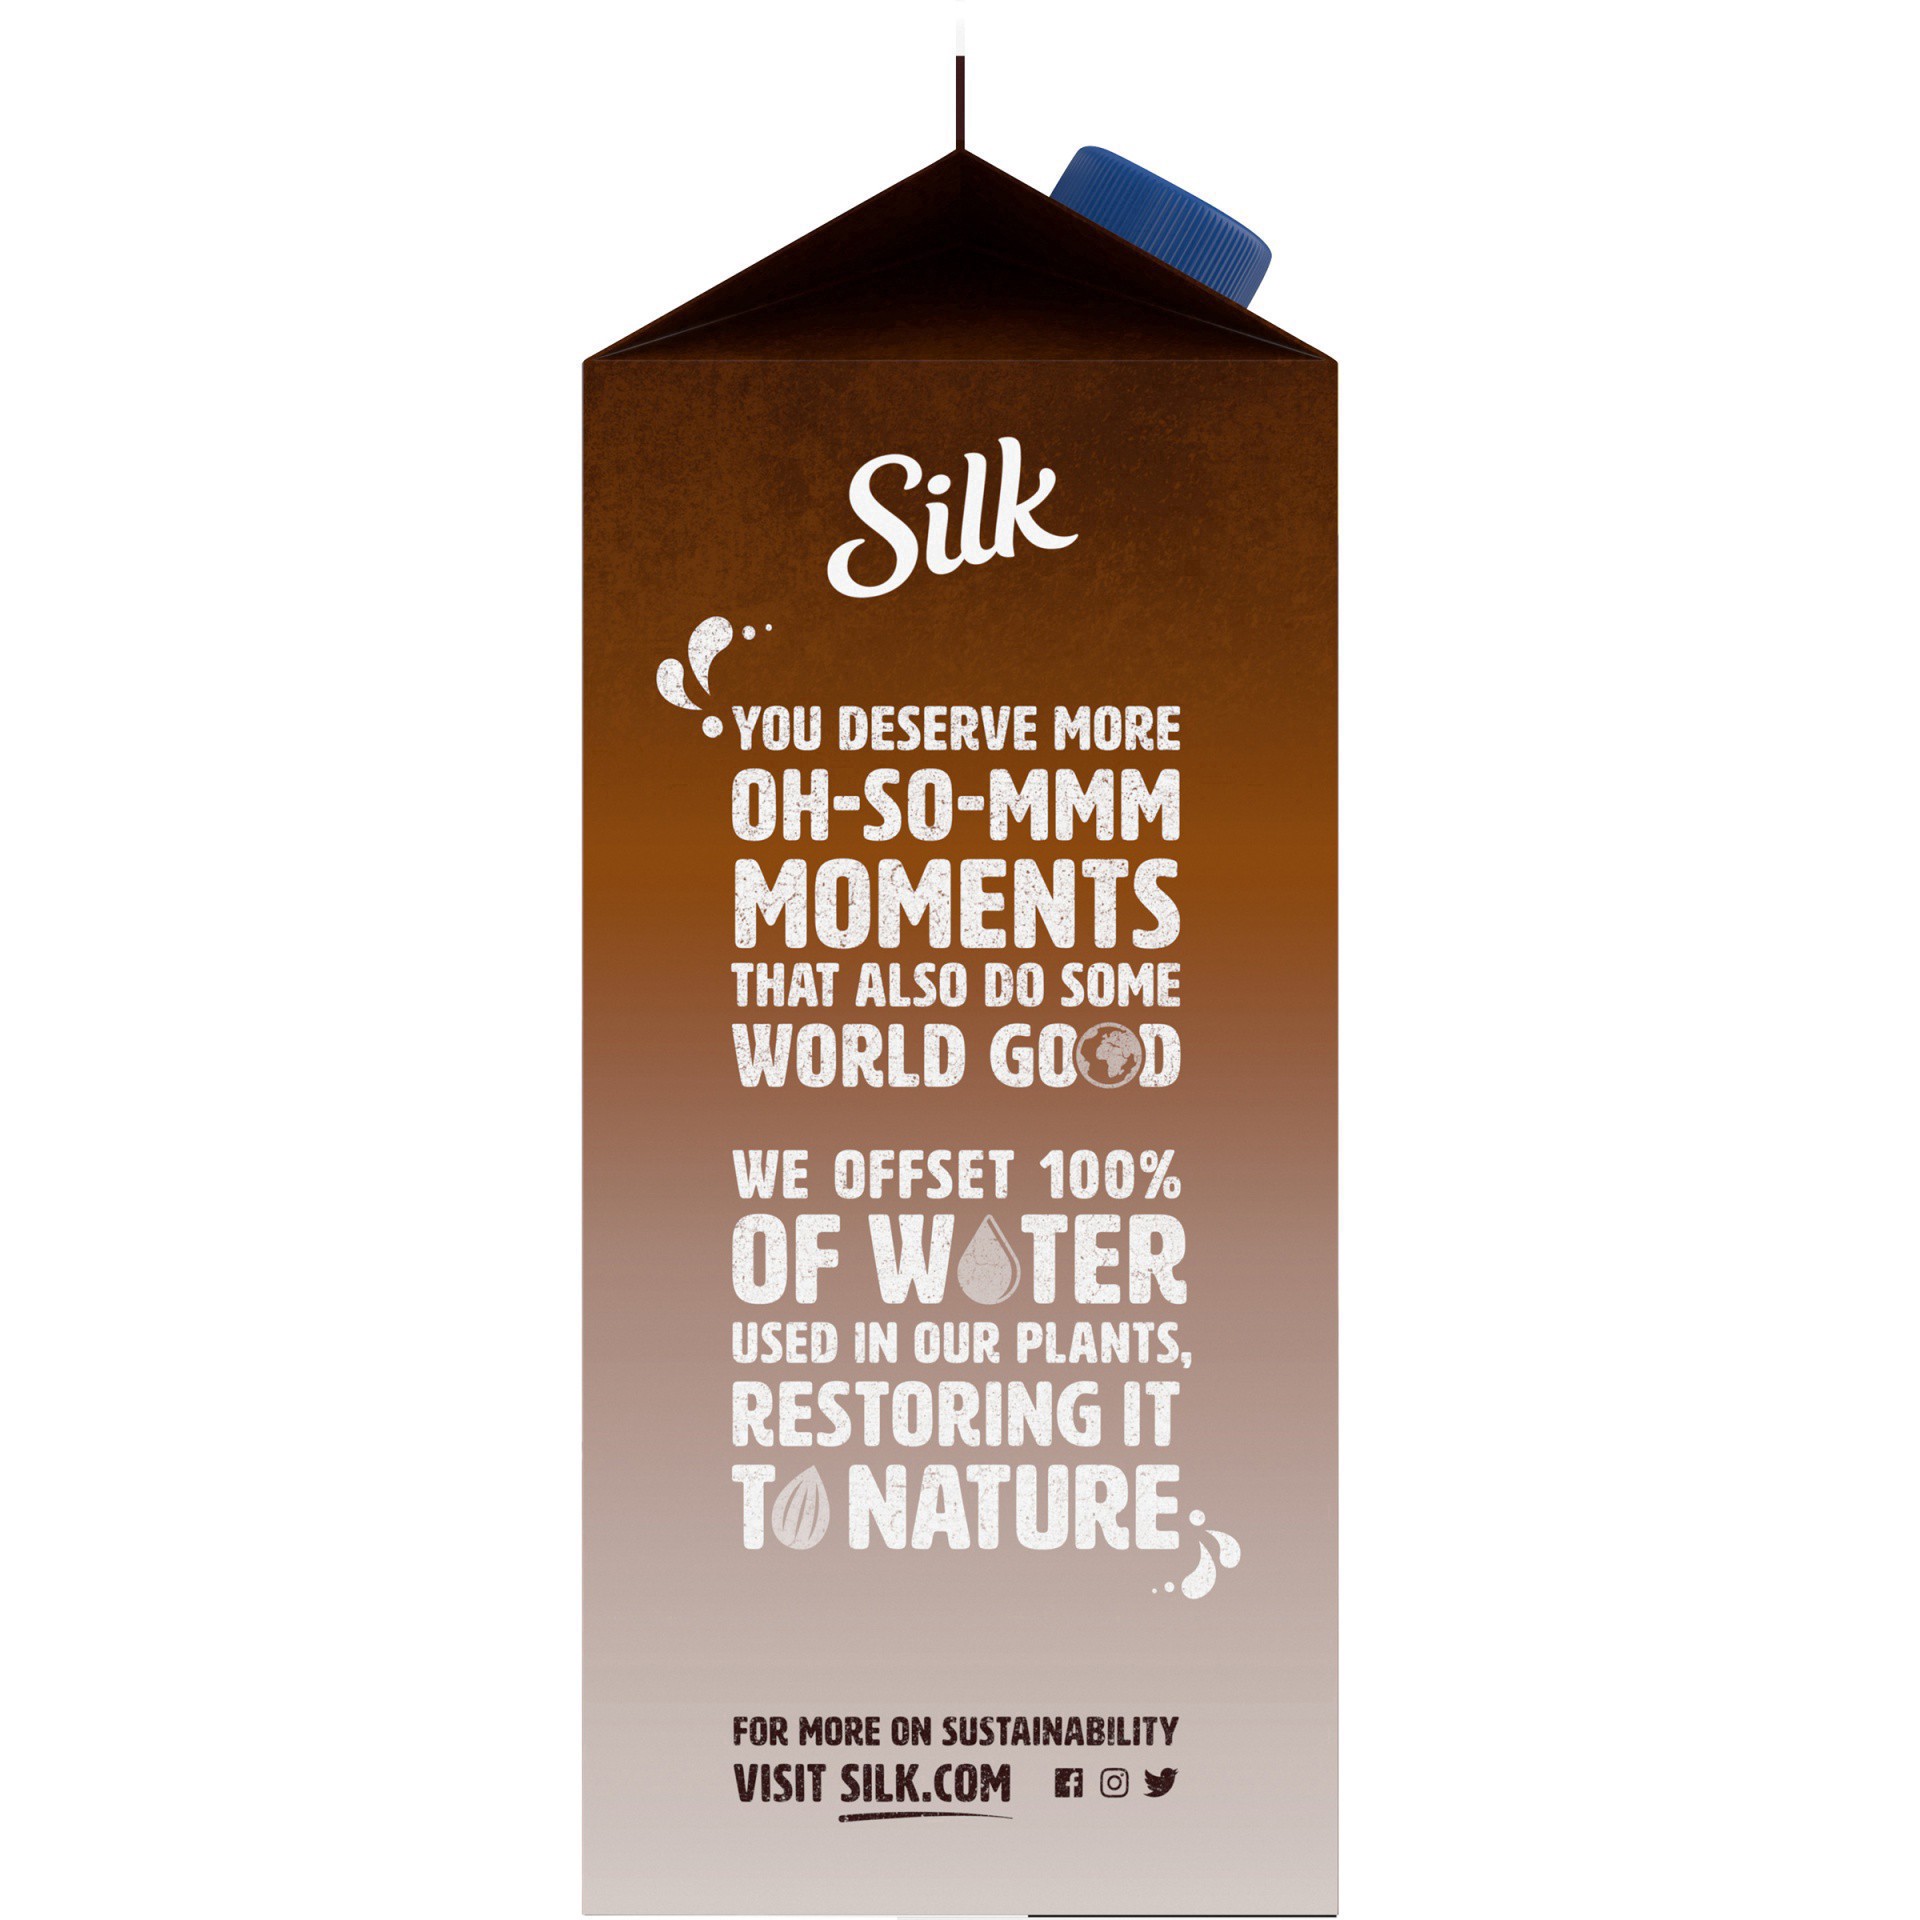 slide 8 of 37, Silk Almond Milk, Dark Chocolate, Dairy Free, Gluten Free, Seriously Creamy Vegan Milk with 25% Less Sugar than Dairy Chocolate Milk, 64 FL OZ Half Gallon, 64 fl oz